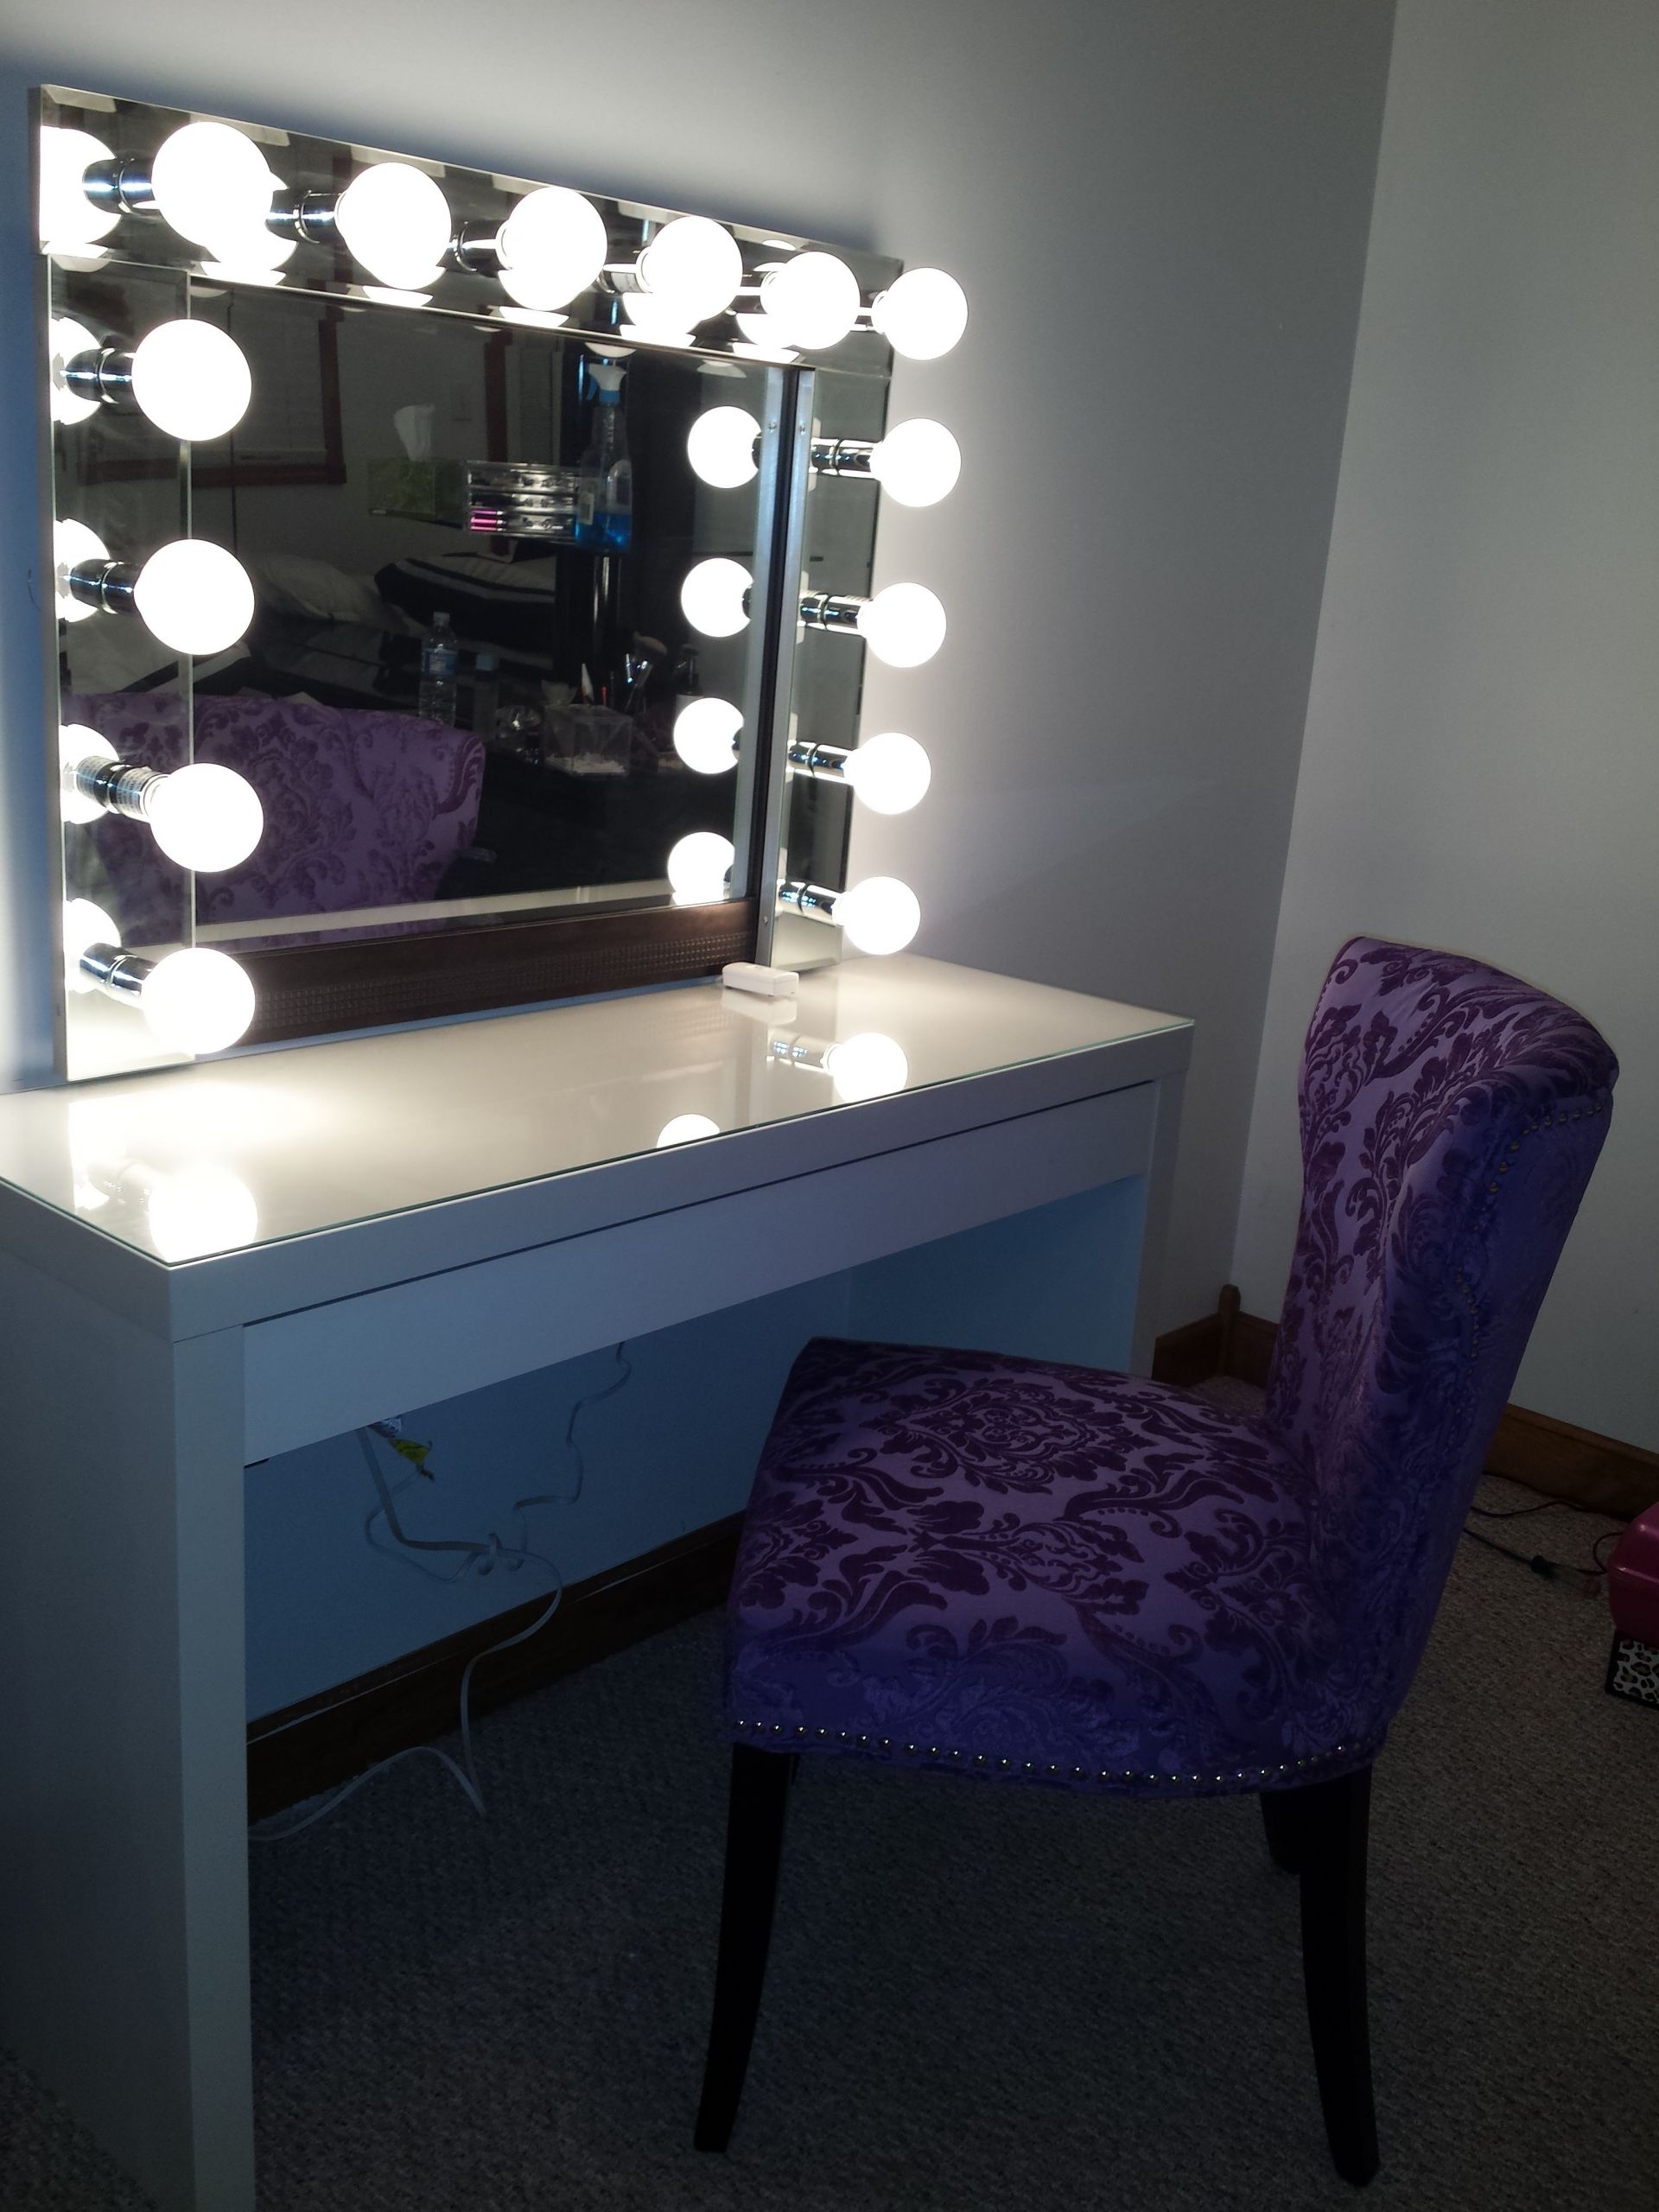 DIY Hollywood Lighted Vanity Mirror
 Vanity Mirror with lights hollywood style